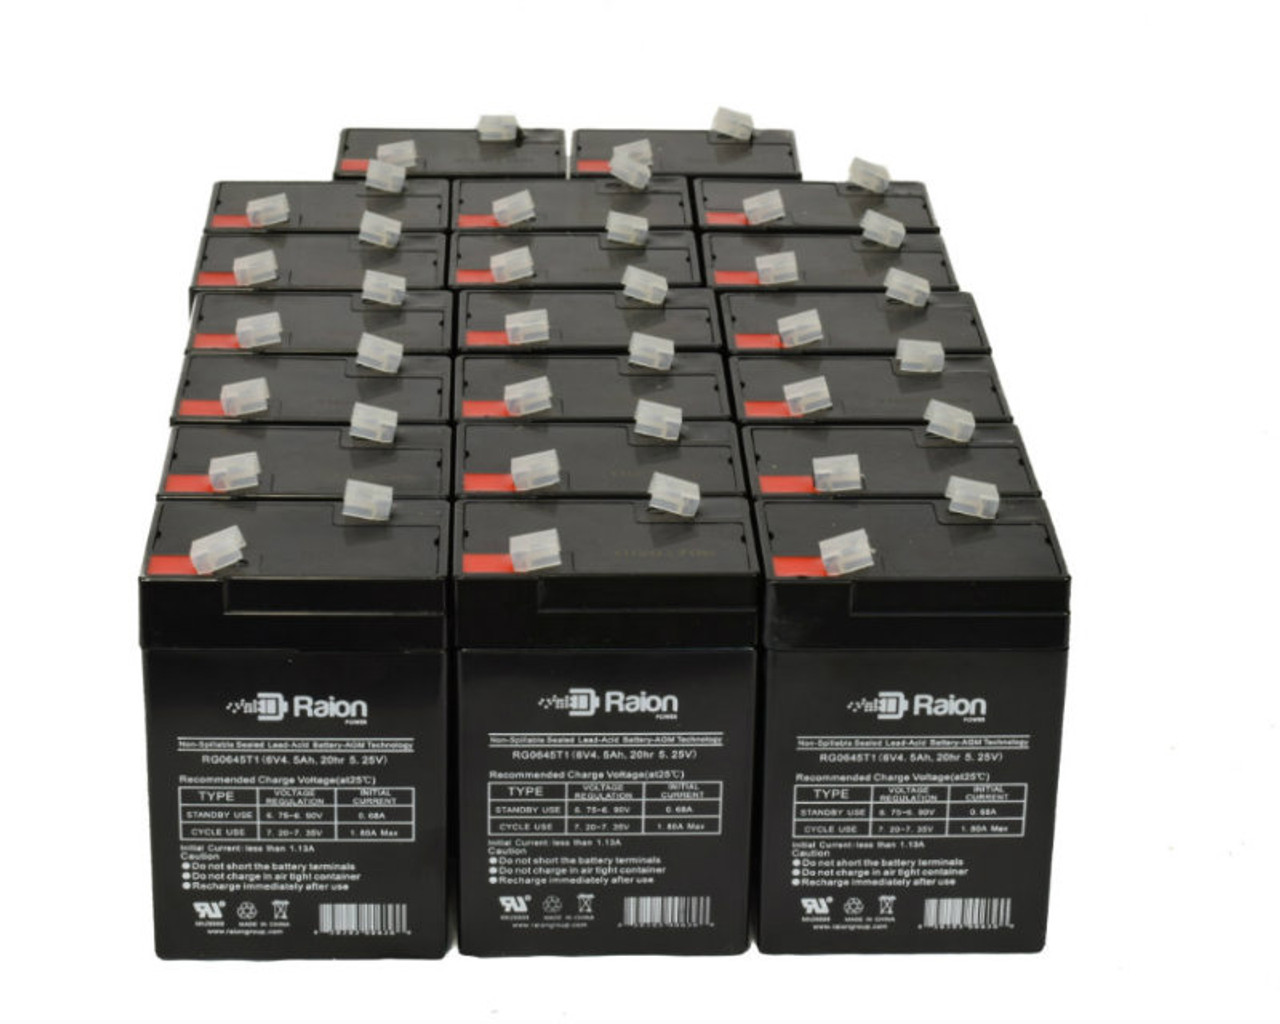 Raion Power 6V 4.5Ah Replacement Emergency Light Battery for Douglas Guardian DG6-4E - 20 Pack